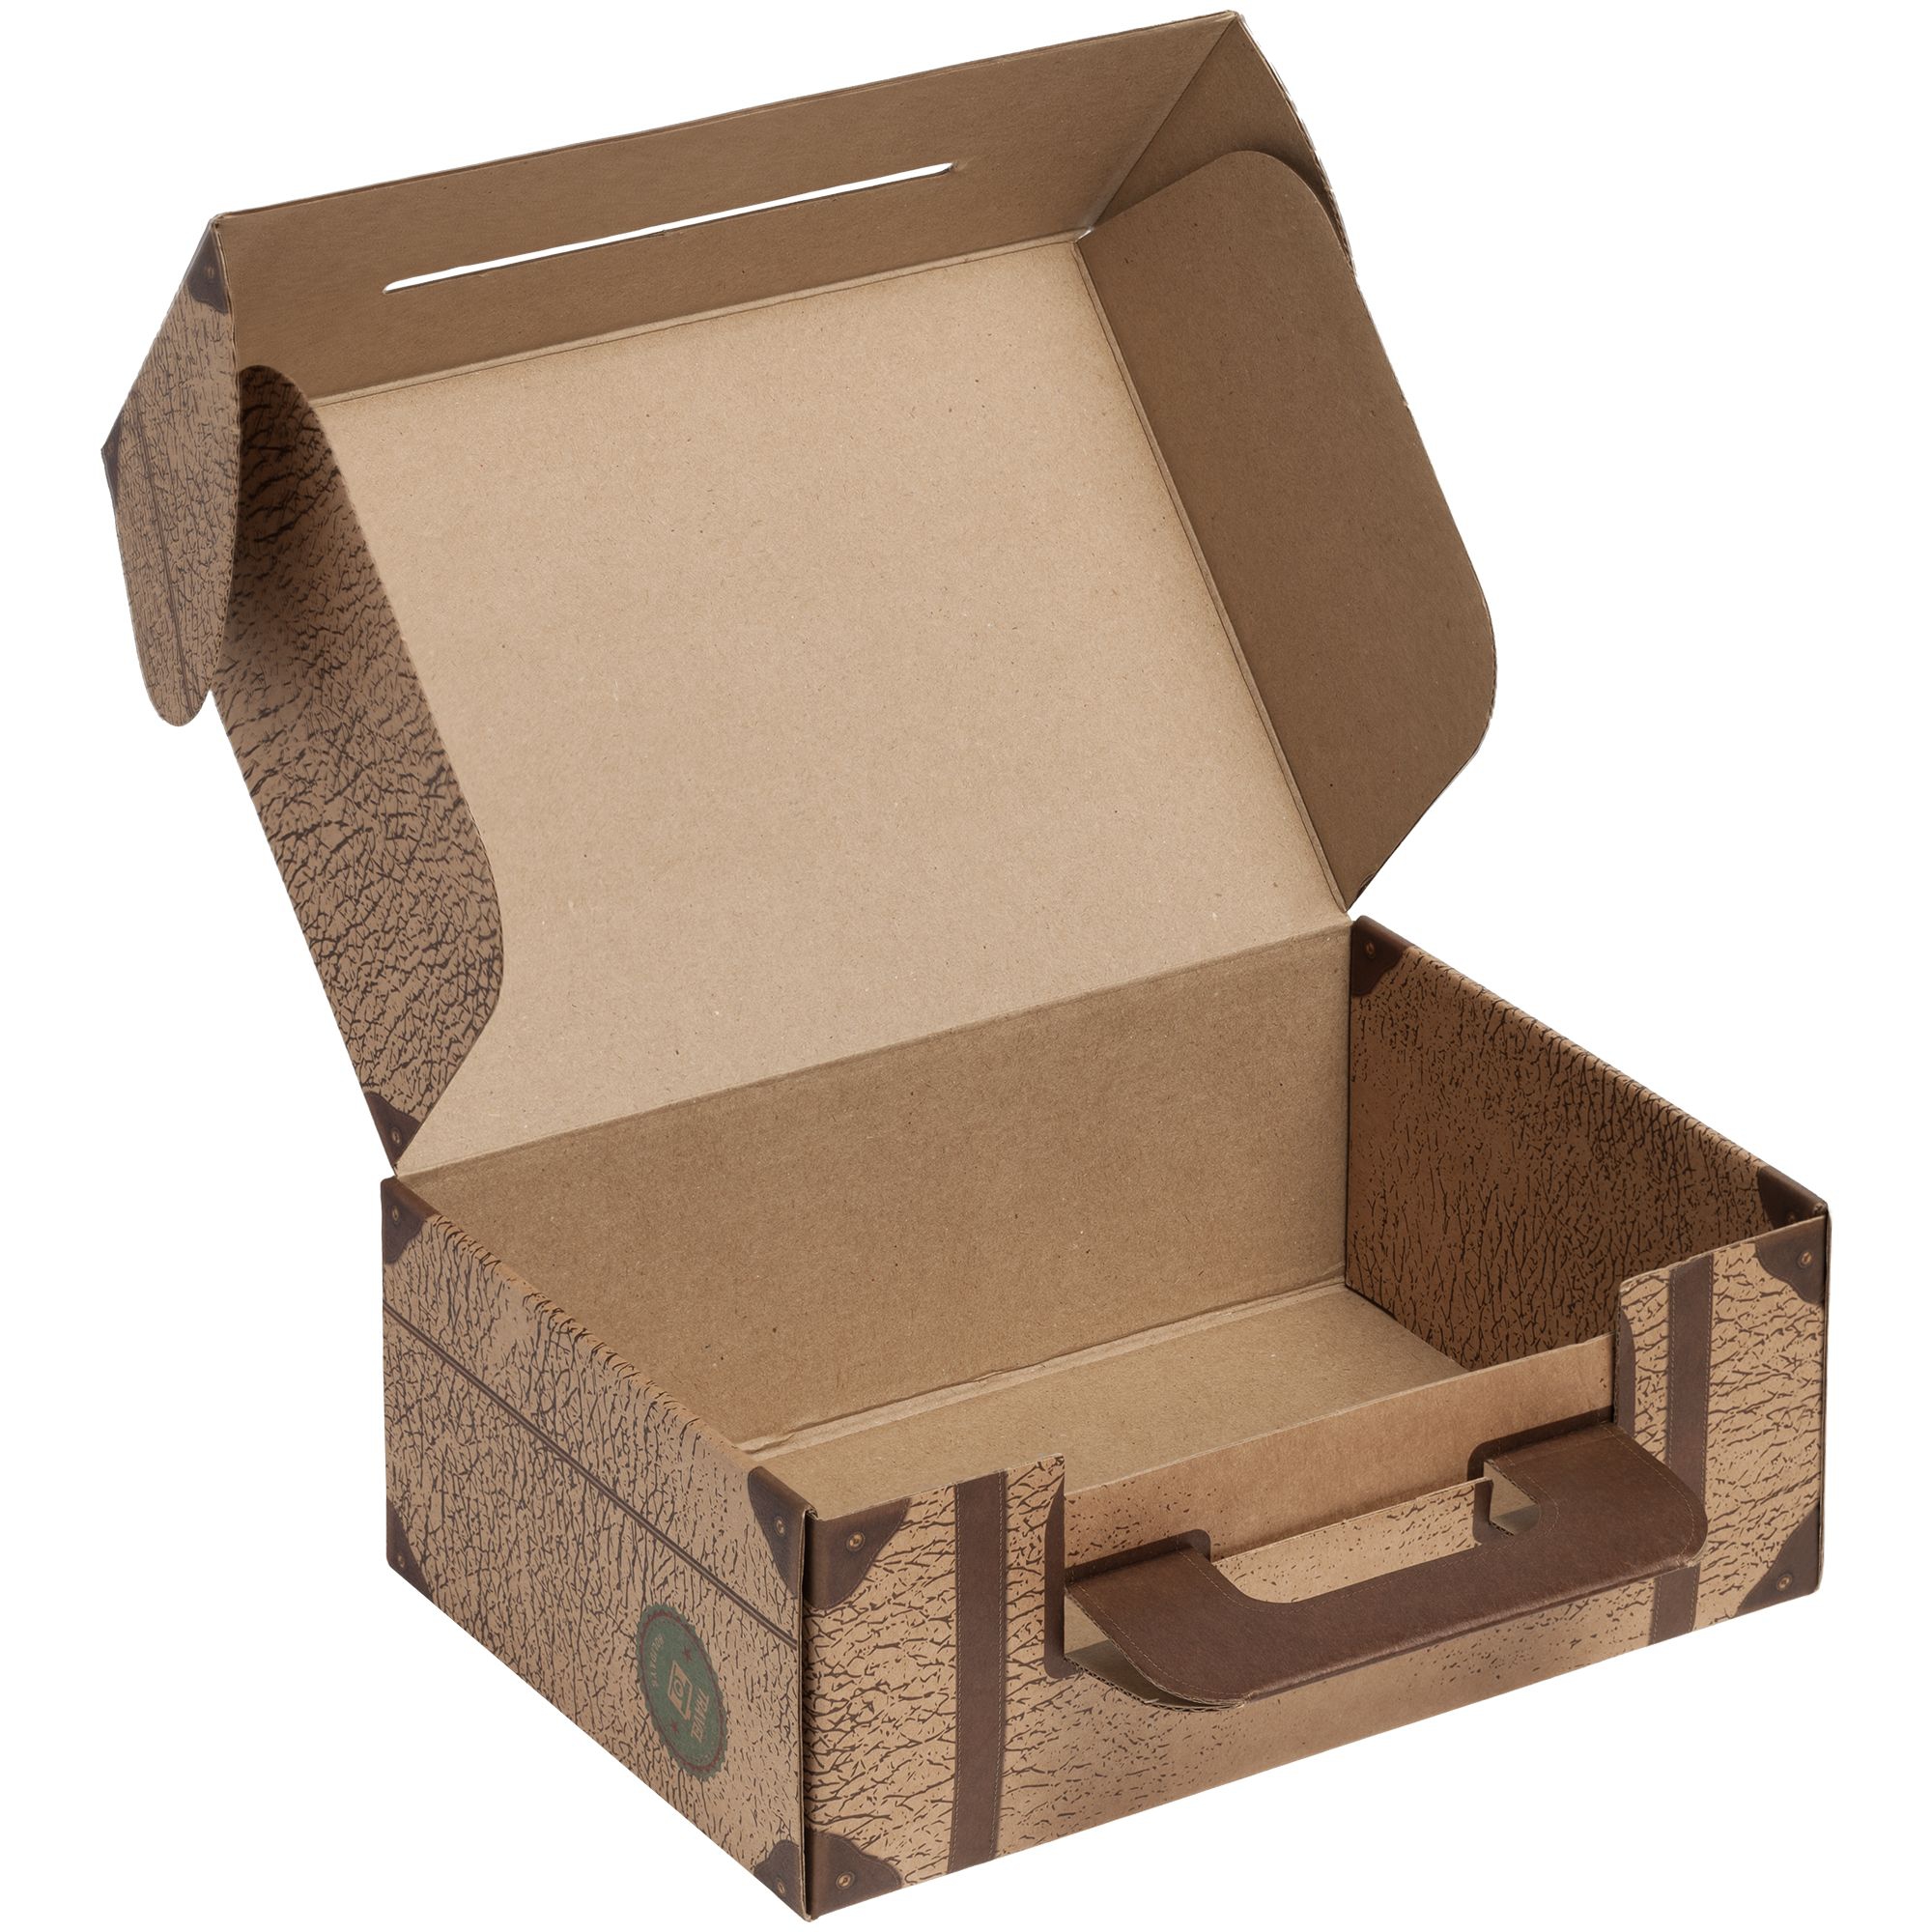 Картонная коробка для подарка. Коробка чемодан самосборная. Коробки из гофрокартона. Коробки из картона. Картонные коробочки для подарков.